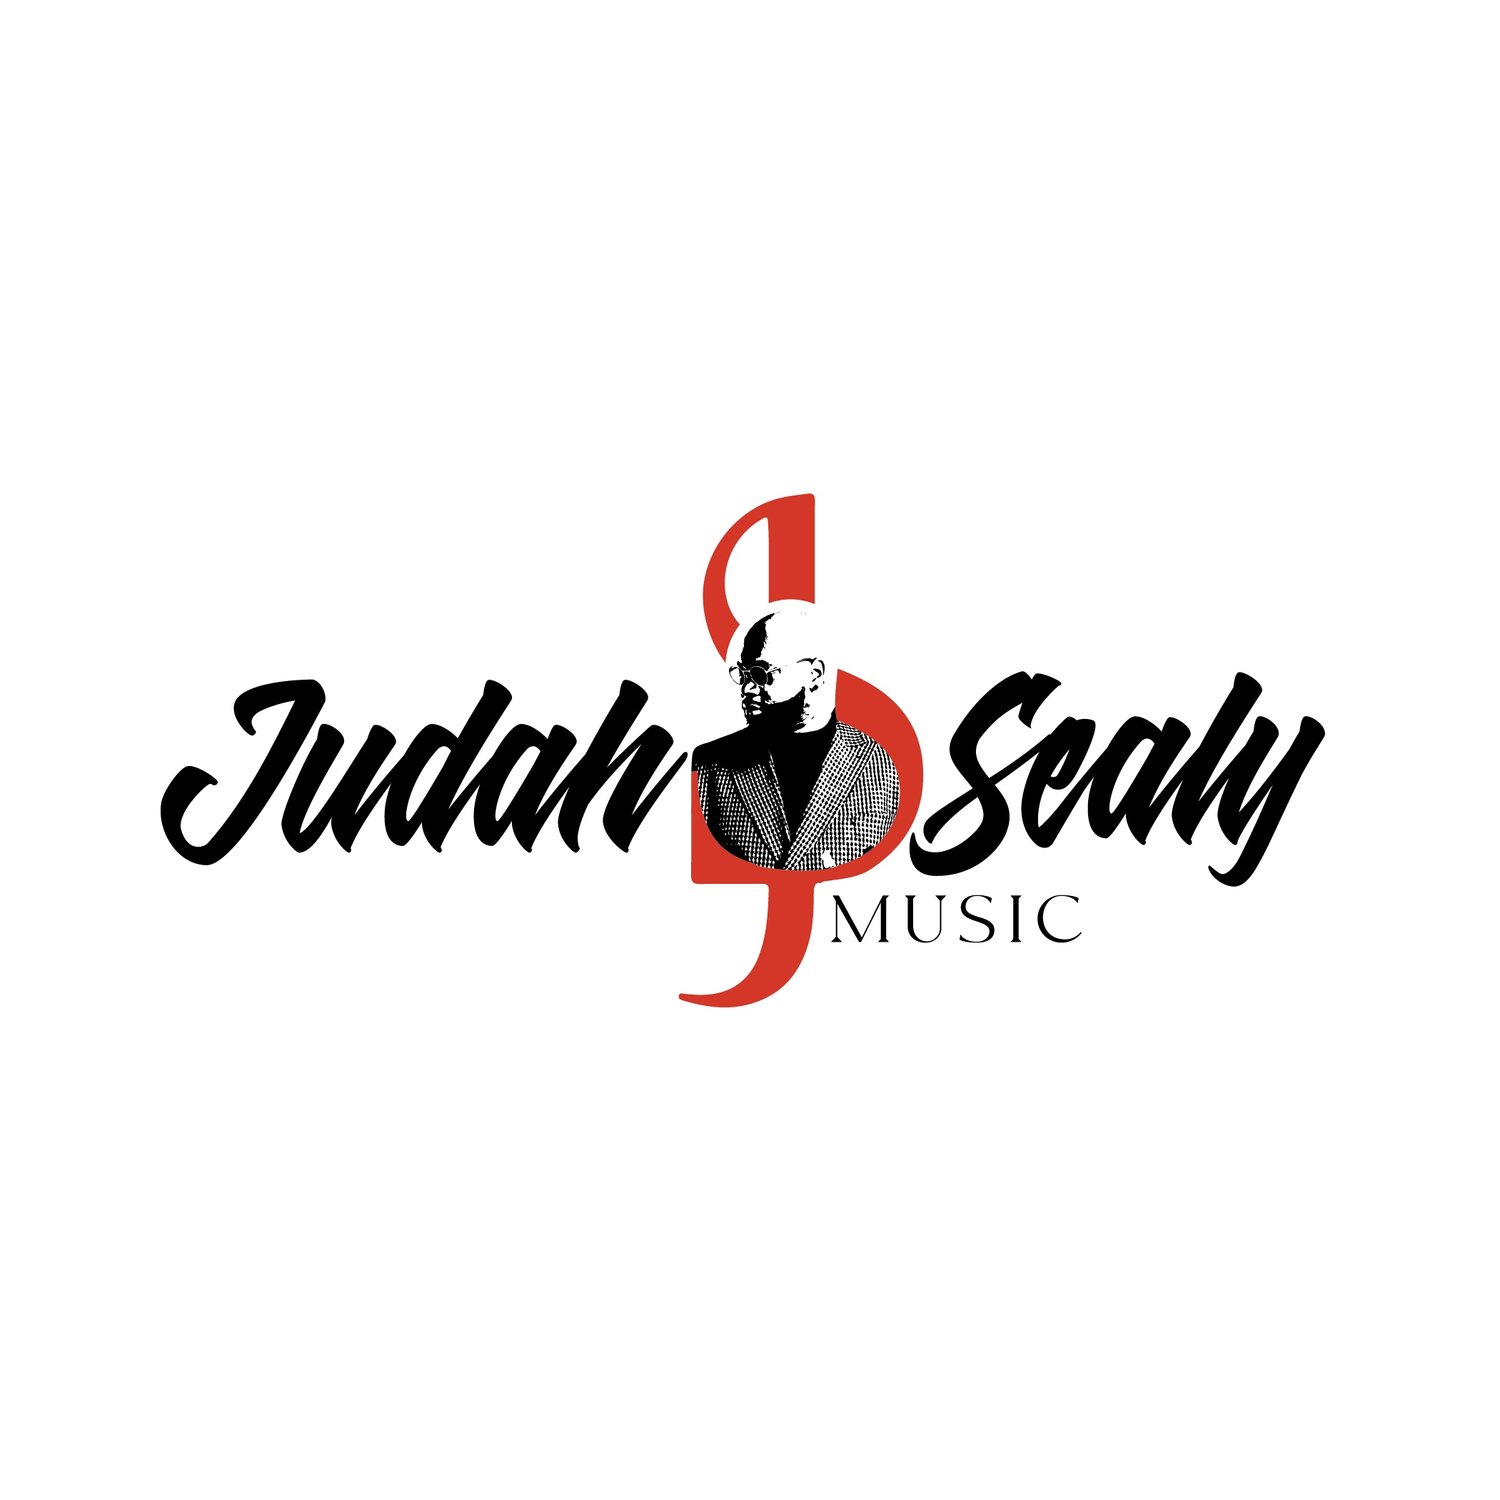 Judah Sealy Music